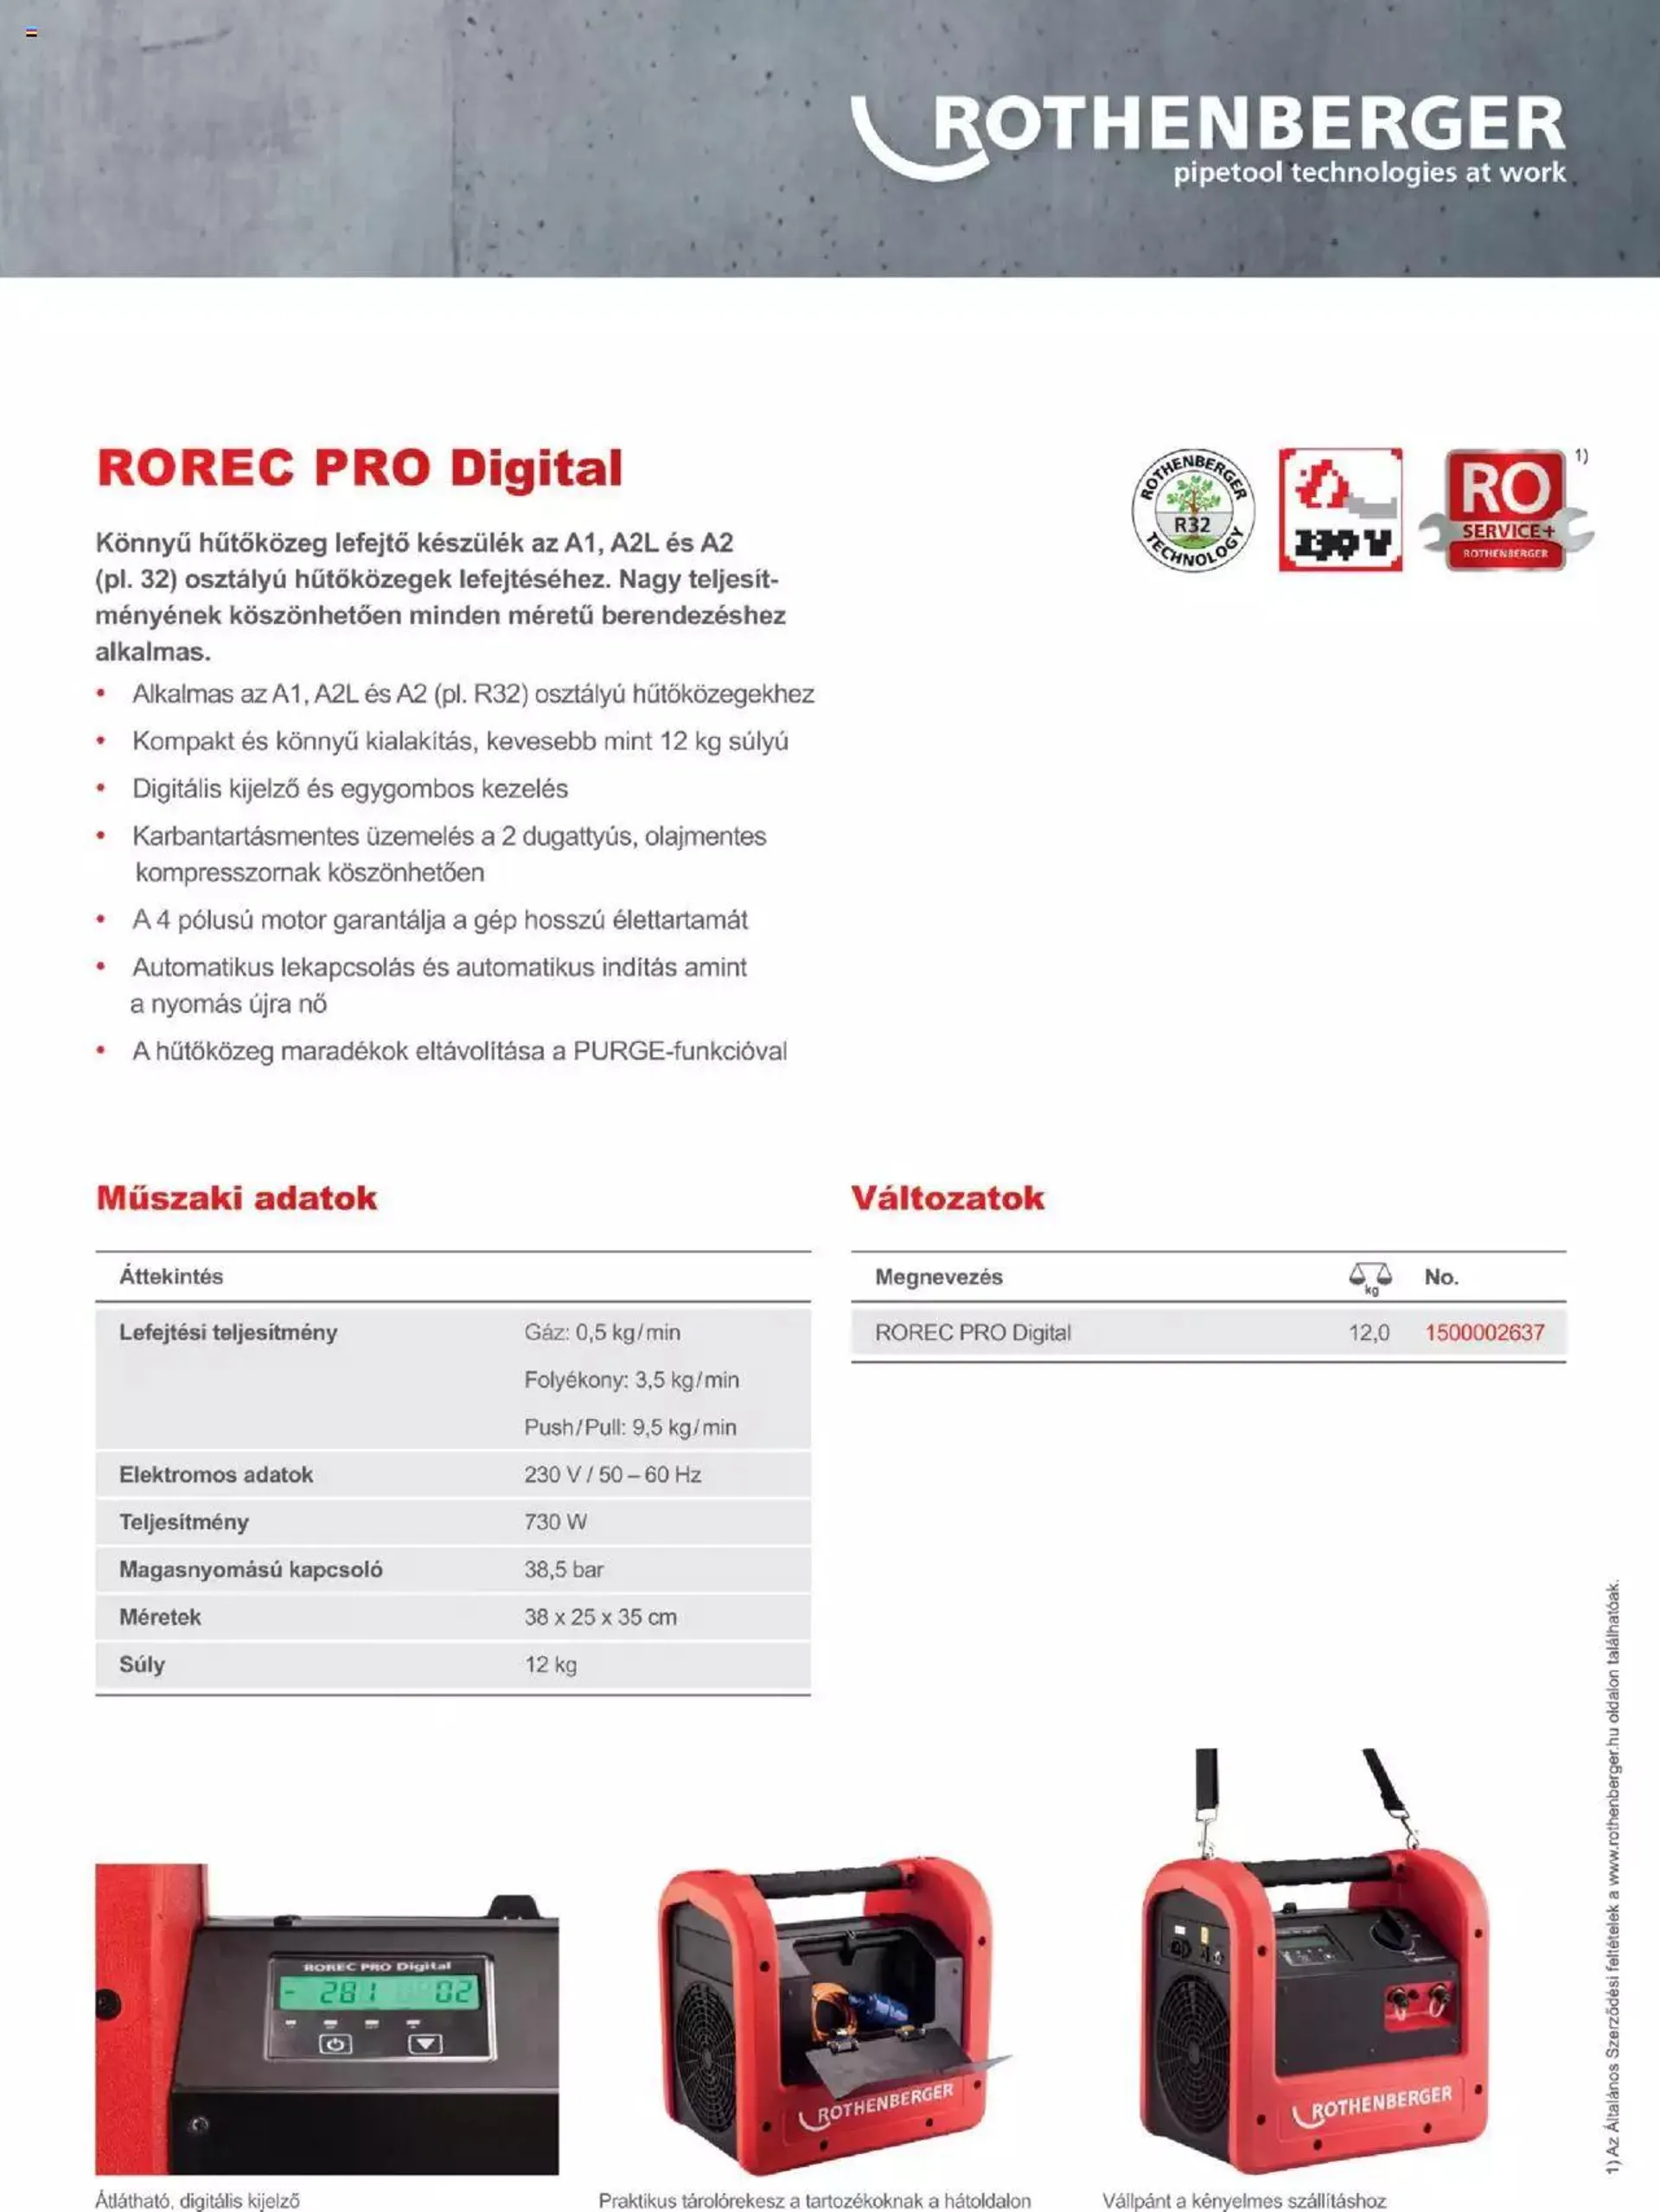 Rothenberger - Rorec Pro Digital - 2